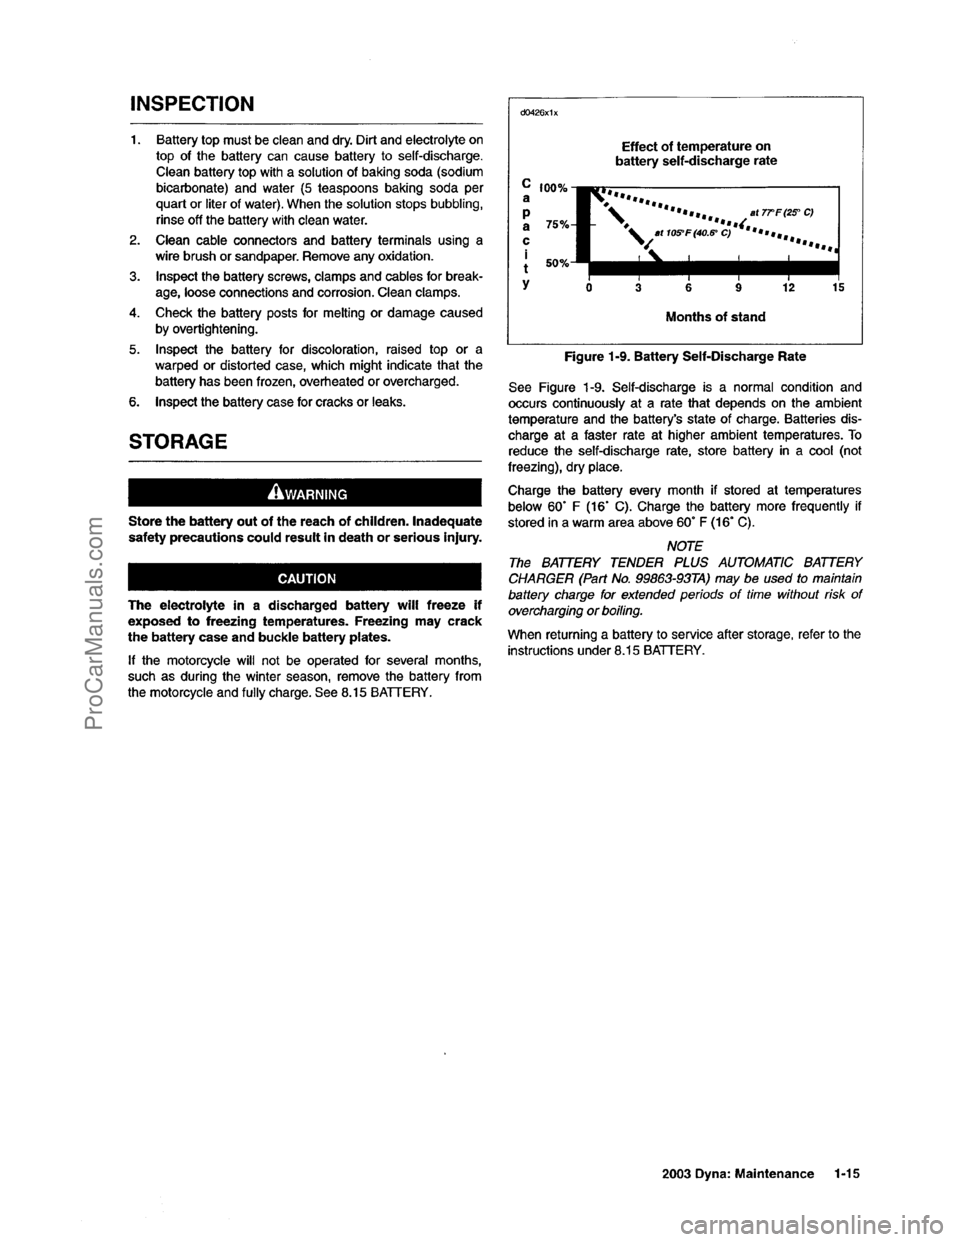 HARLEY-DAVIDSON DYNA GLIDE 2003 Owners Guide  [17]
ProCarManuals.com 